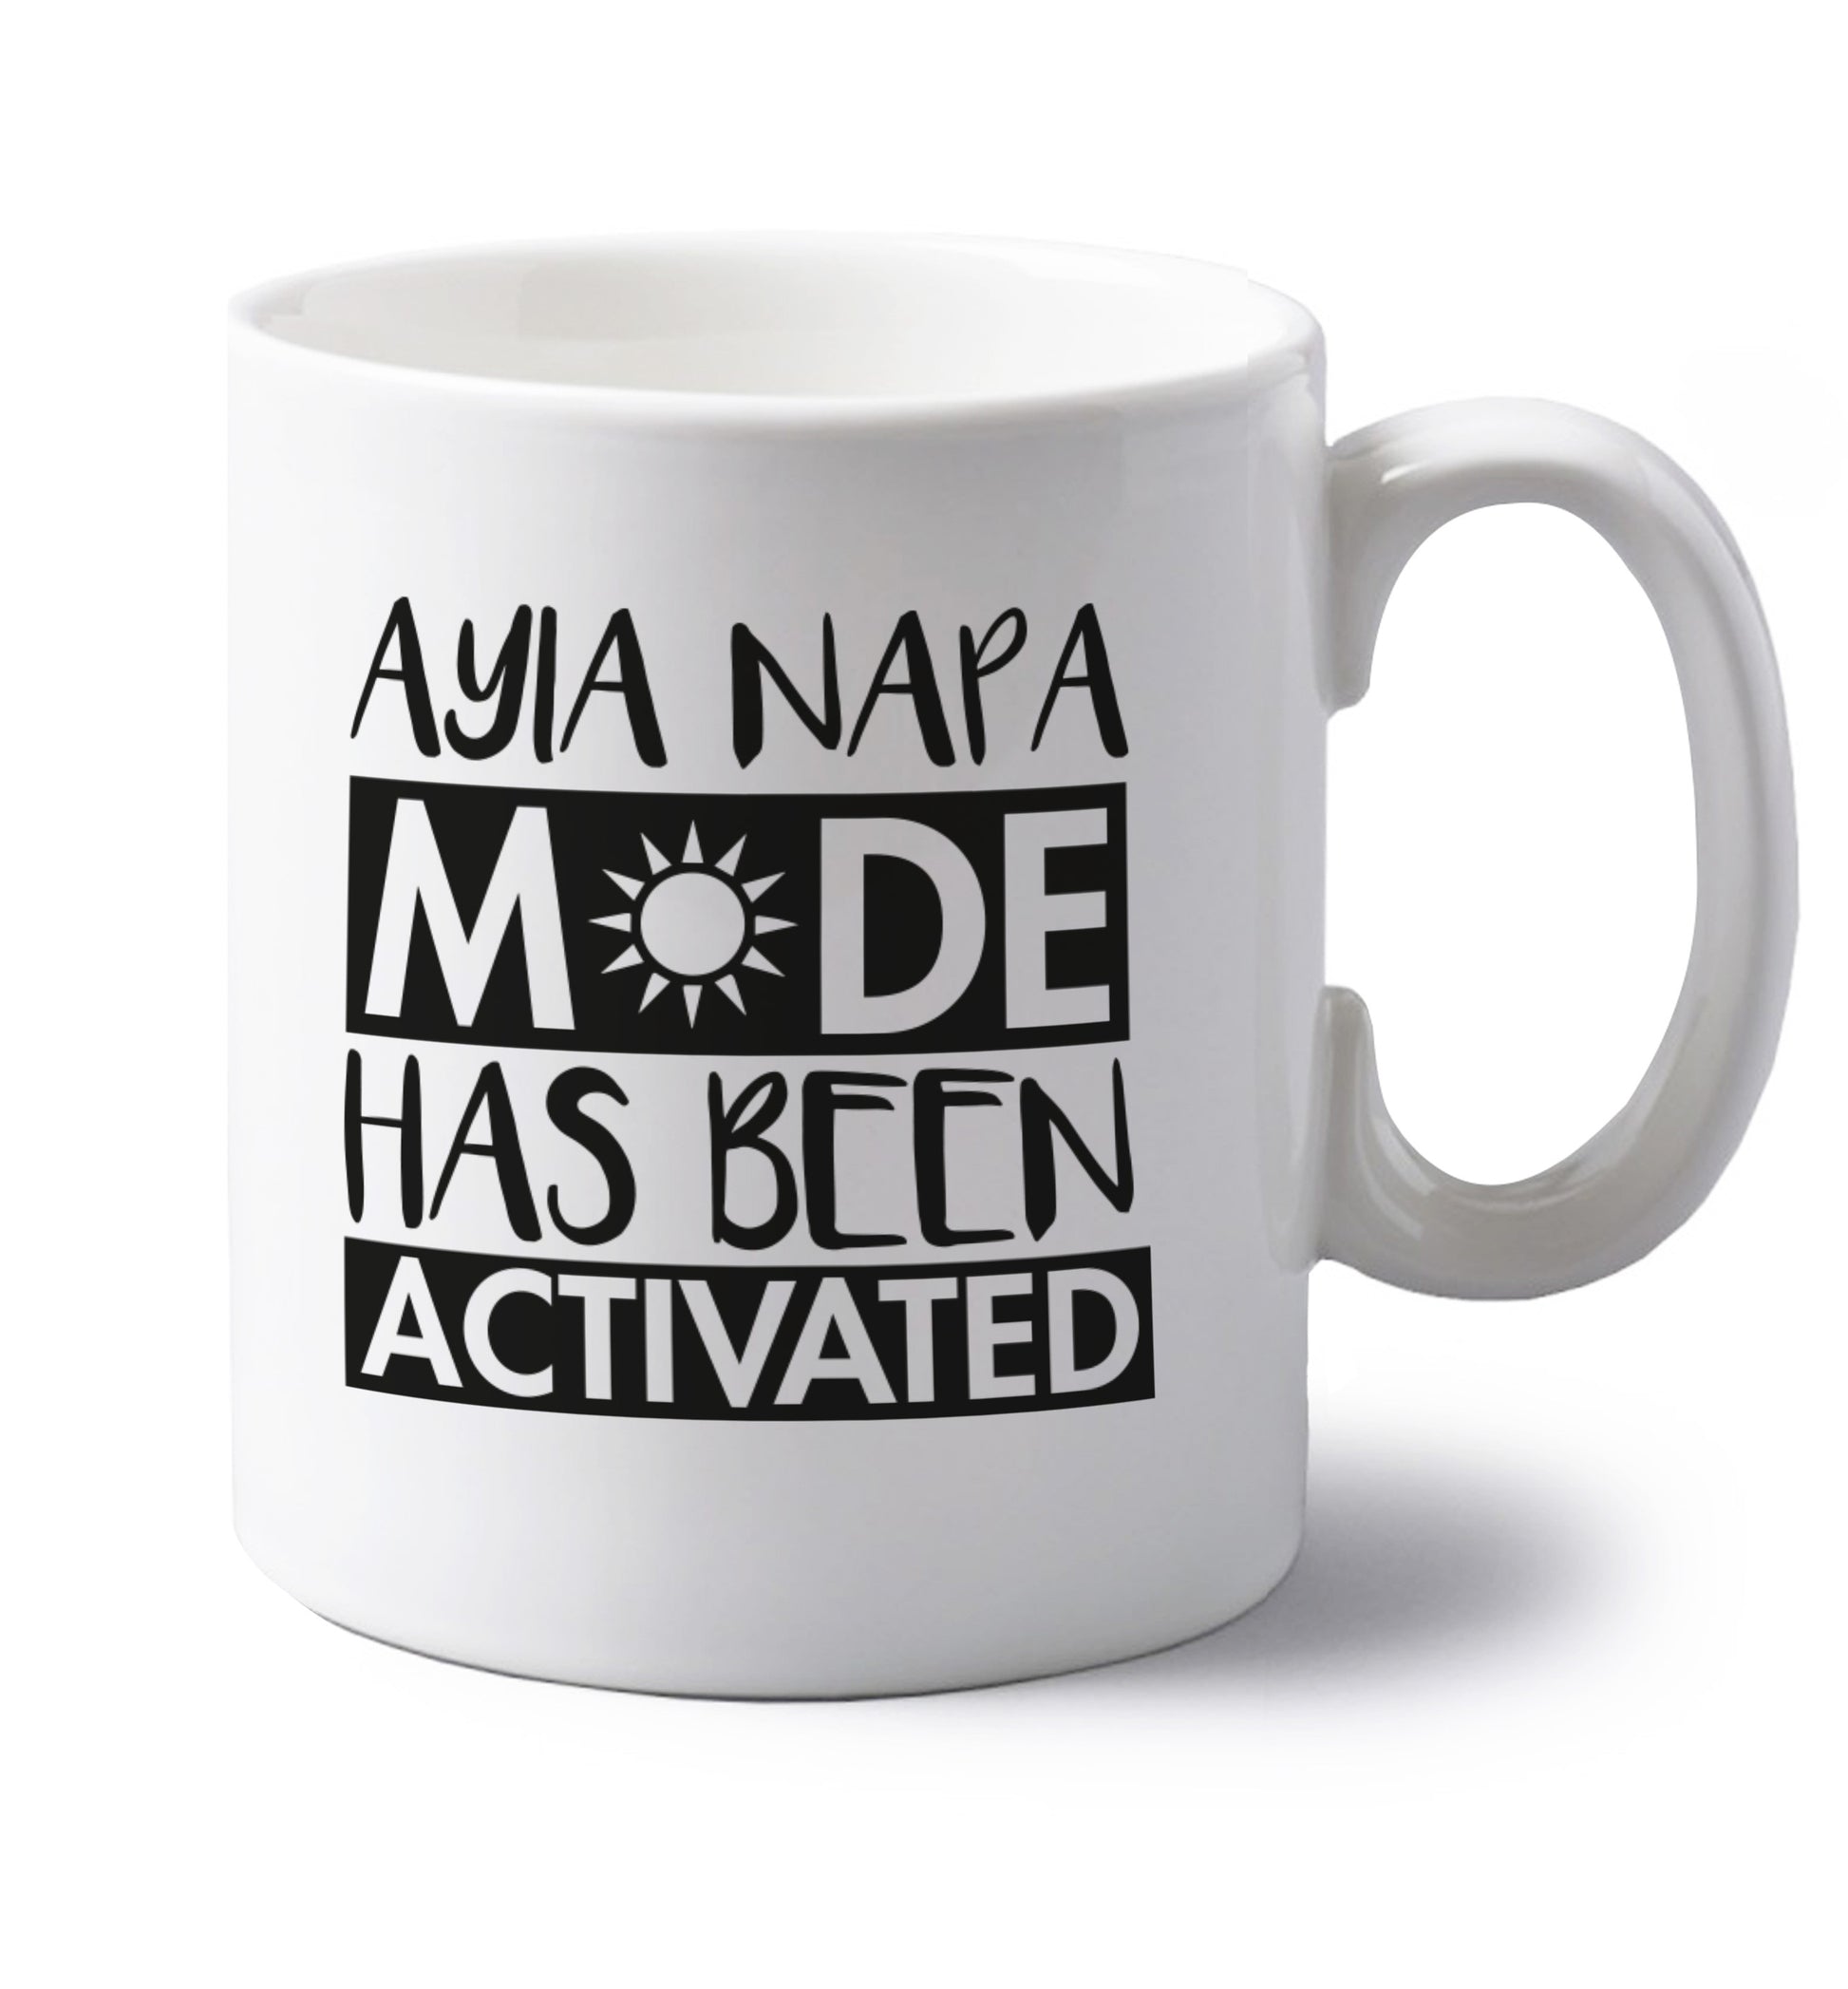 Aiya Napa mode has been activated left handed white ceramic mug 